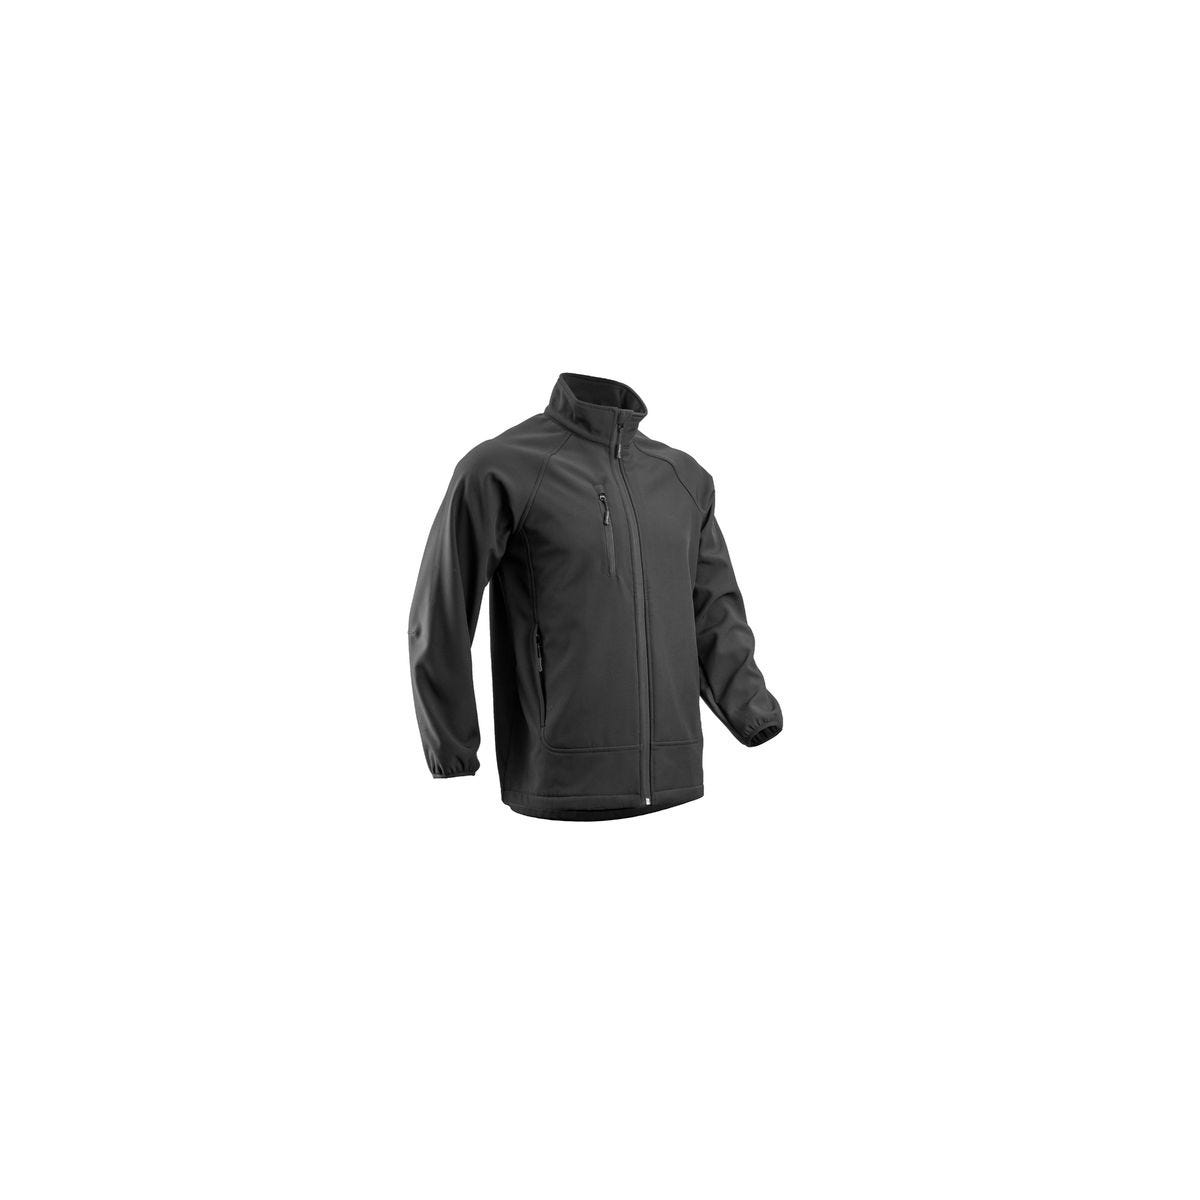 SOBA Veste Softshell noire, homme, 290g/m² - COVERGUARD - Taille 3XL 0